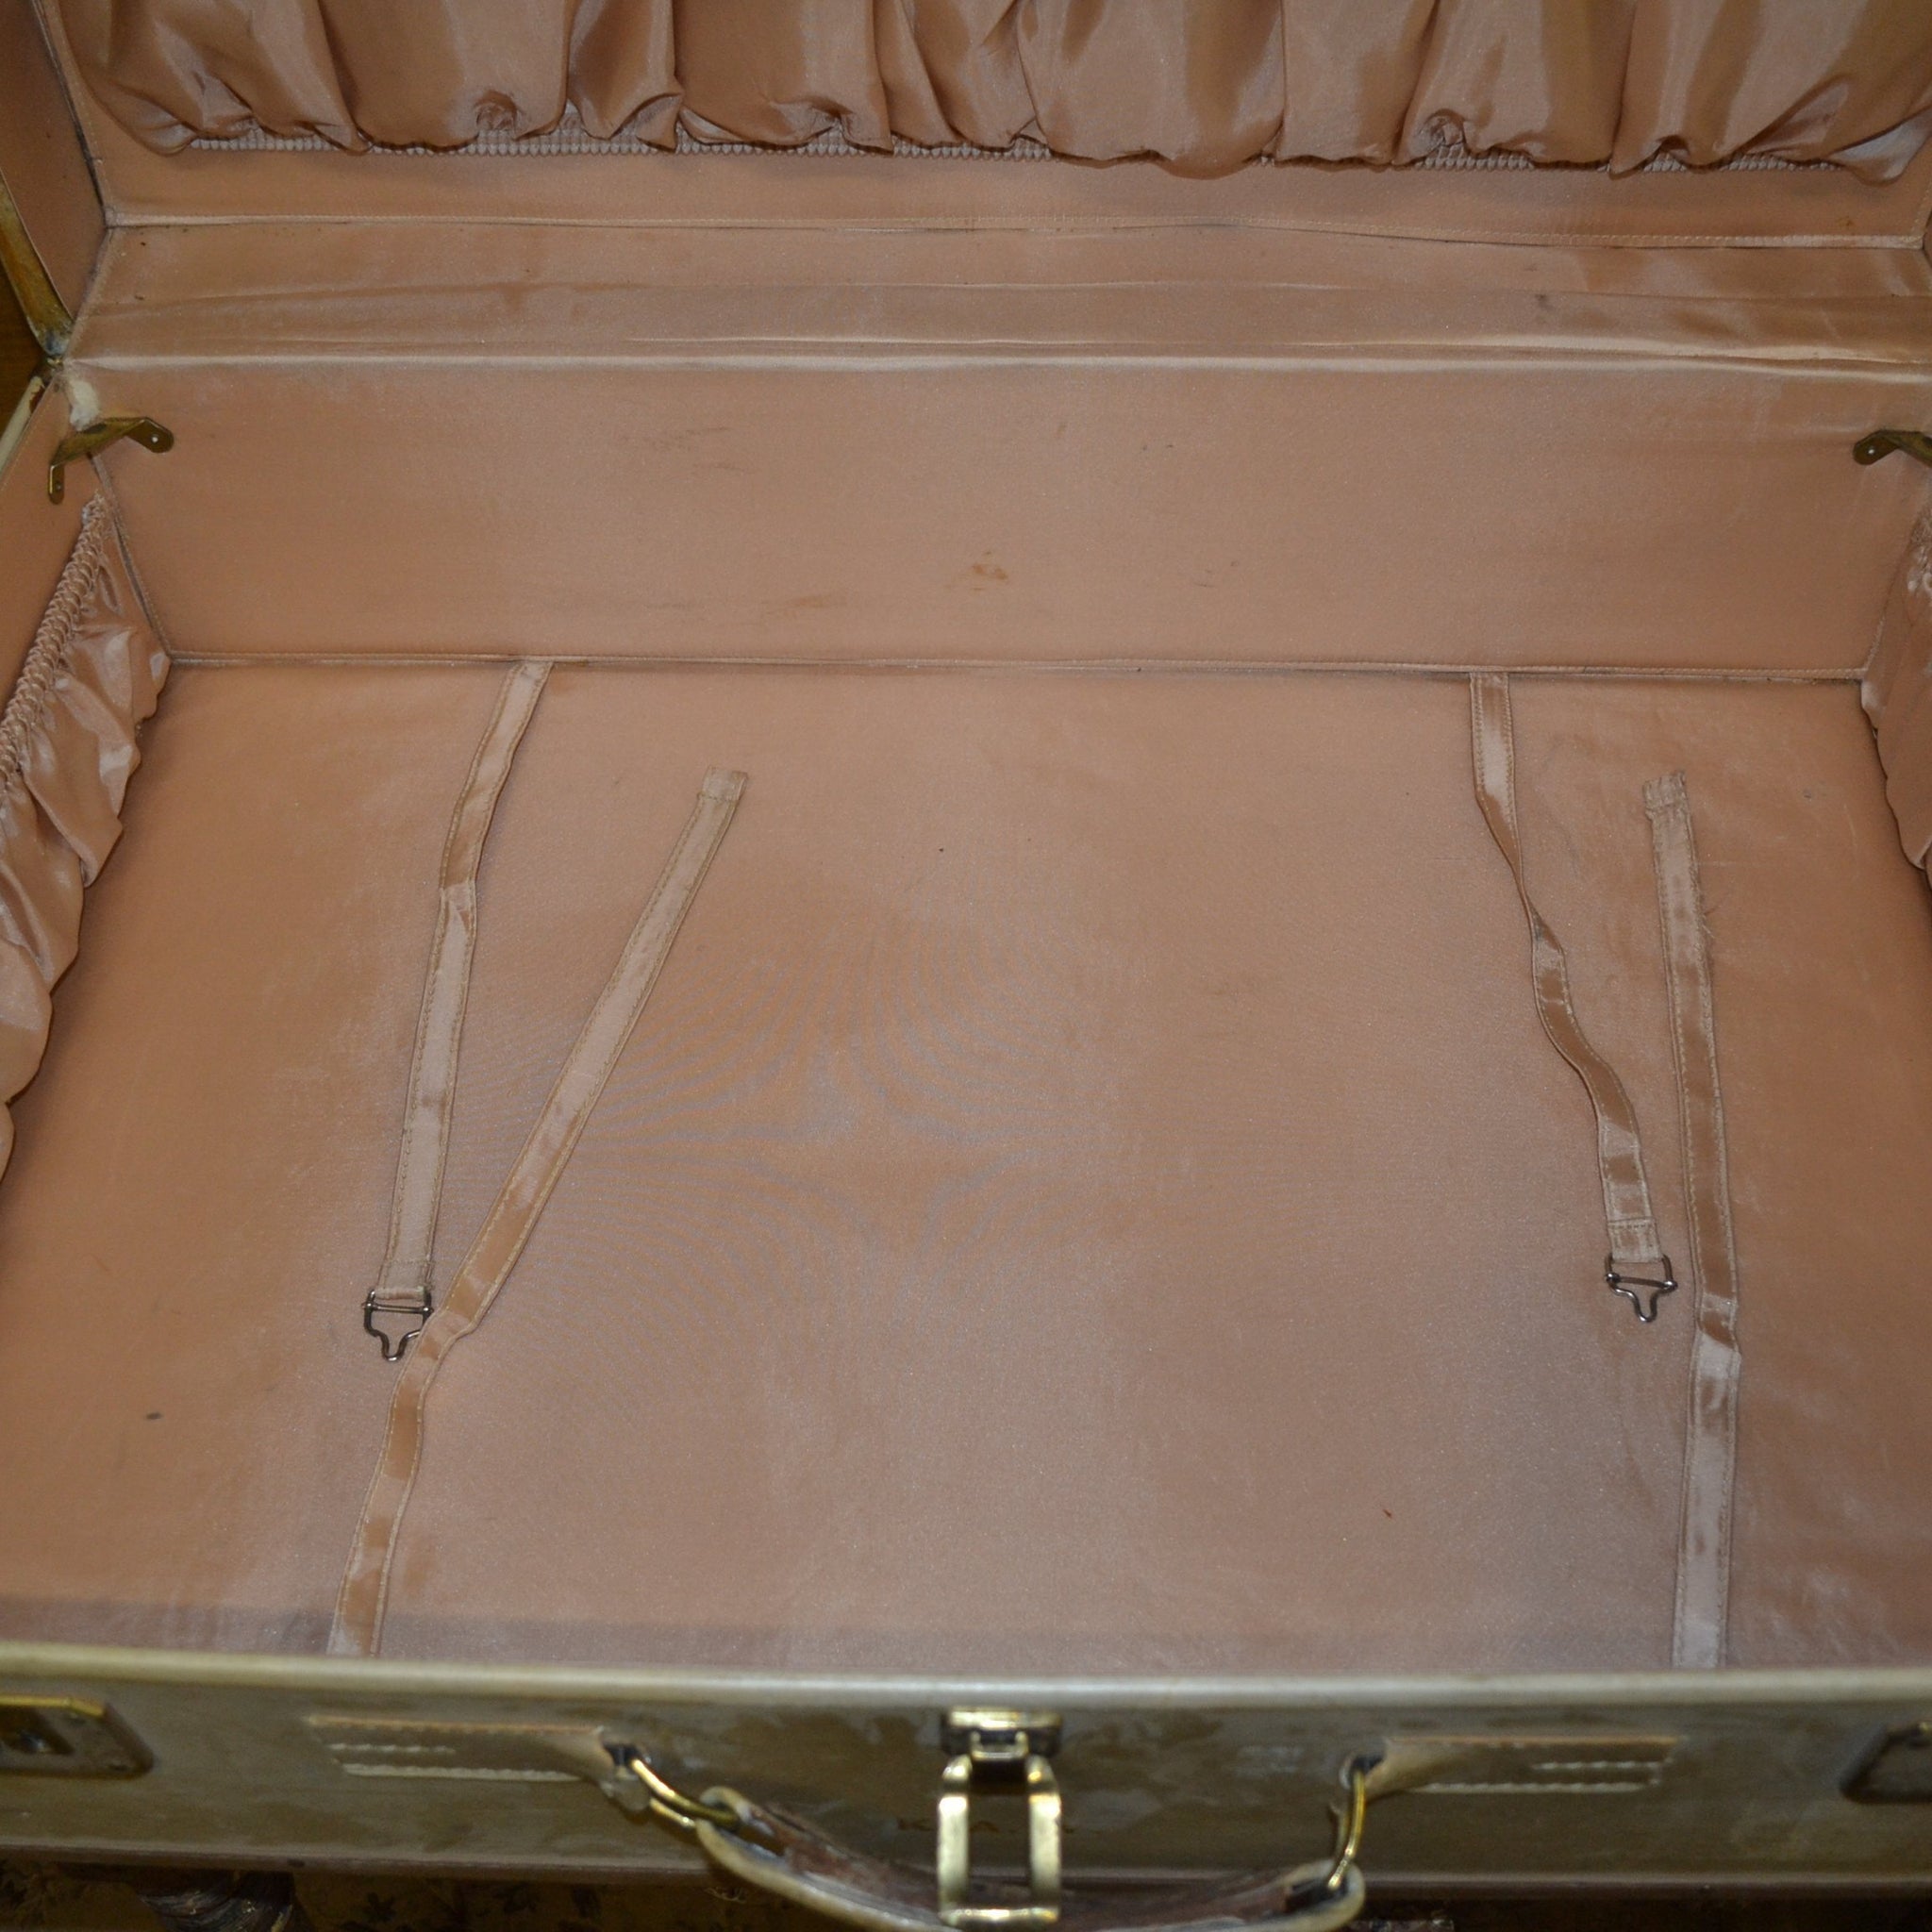 Early 20th Century Vintage Hartman Skymate Tan Hard Case Leather Suitcase  Luggage - 3 Pc Set